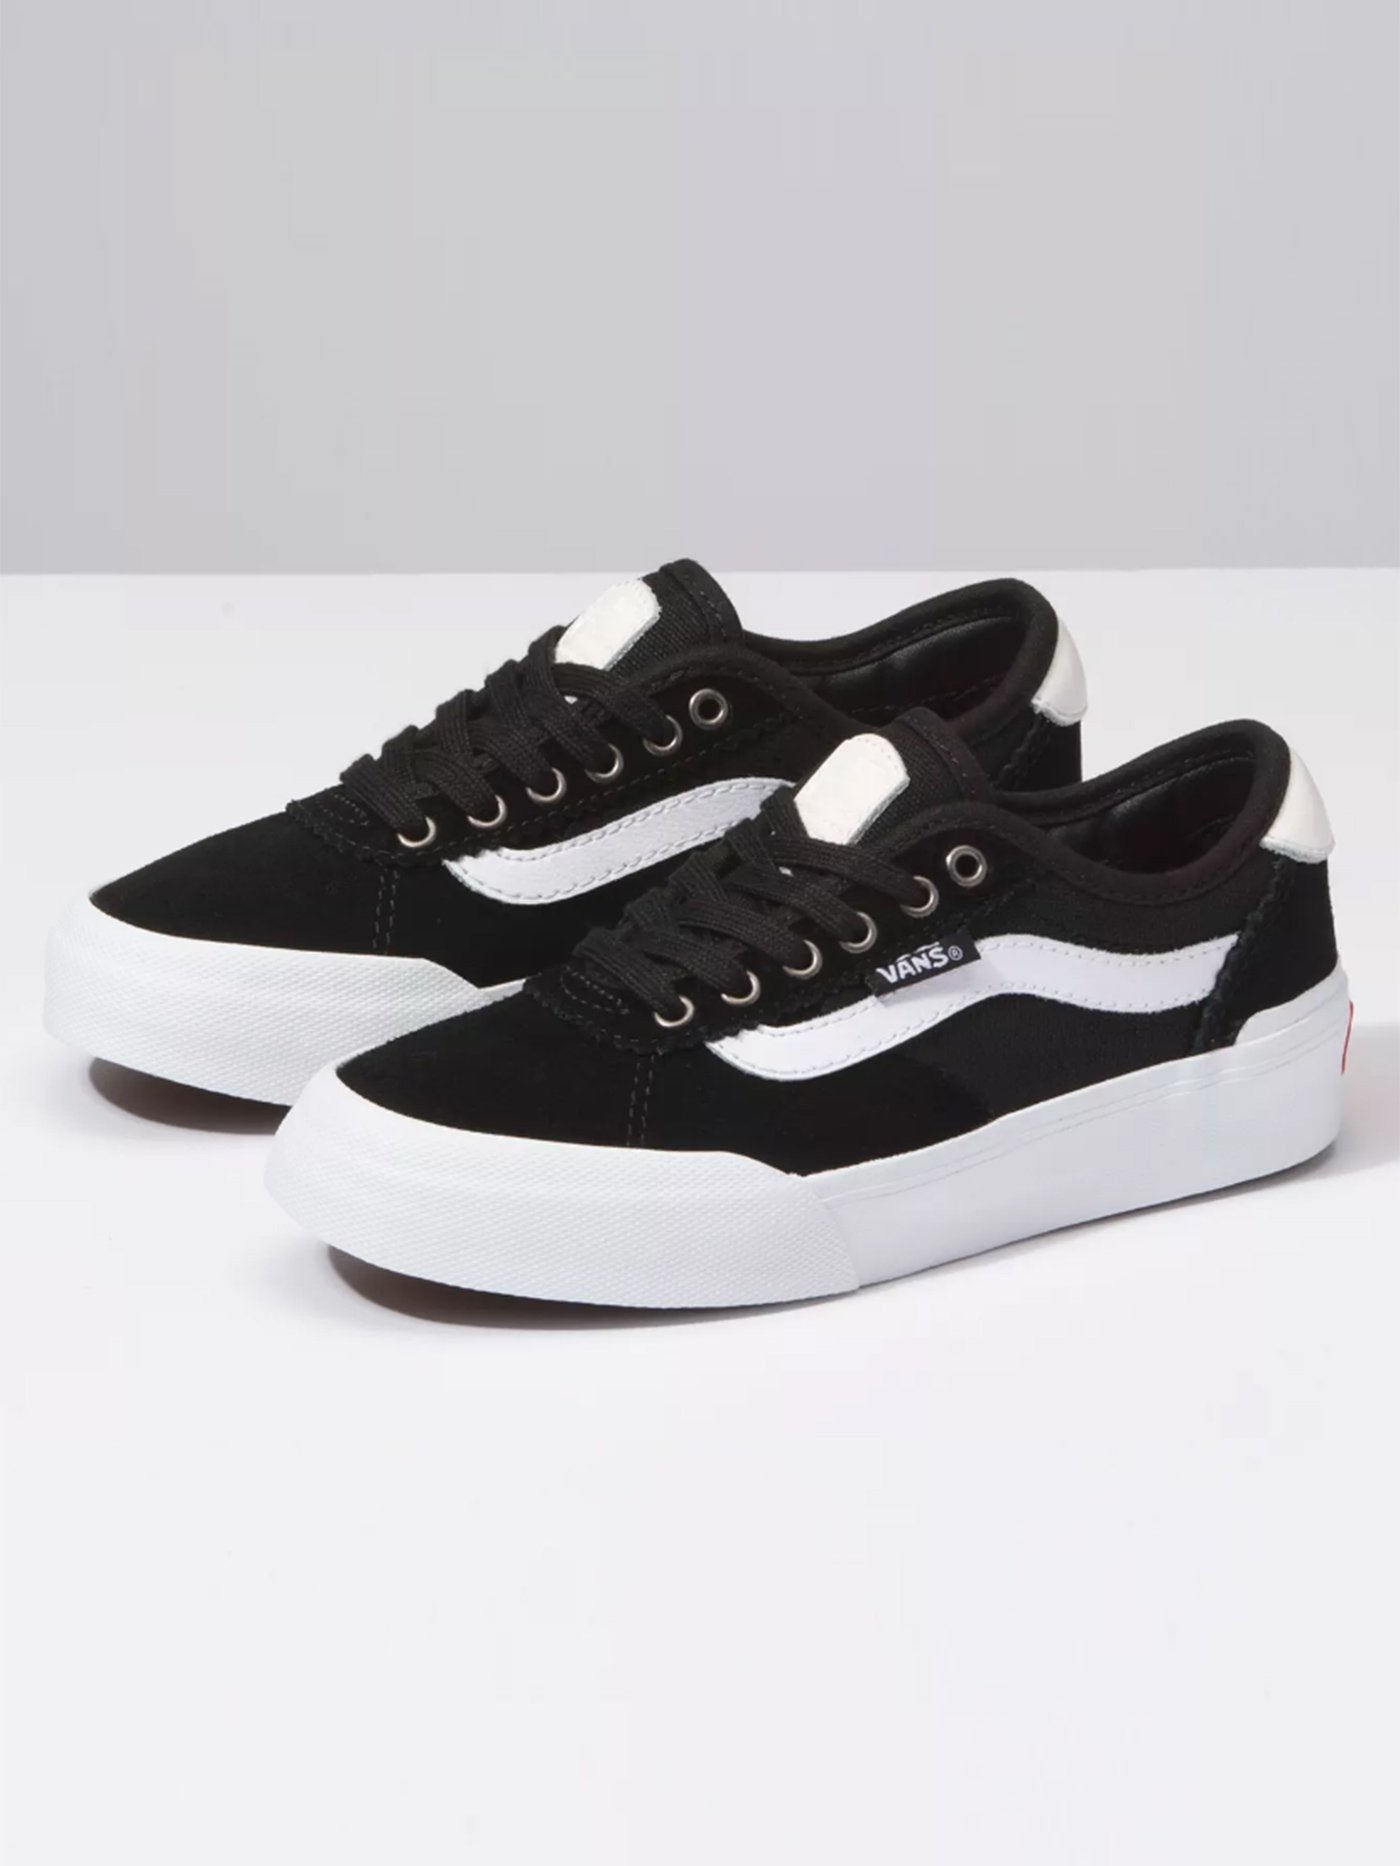 Vans Chima Pro Black/White Shoes